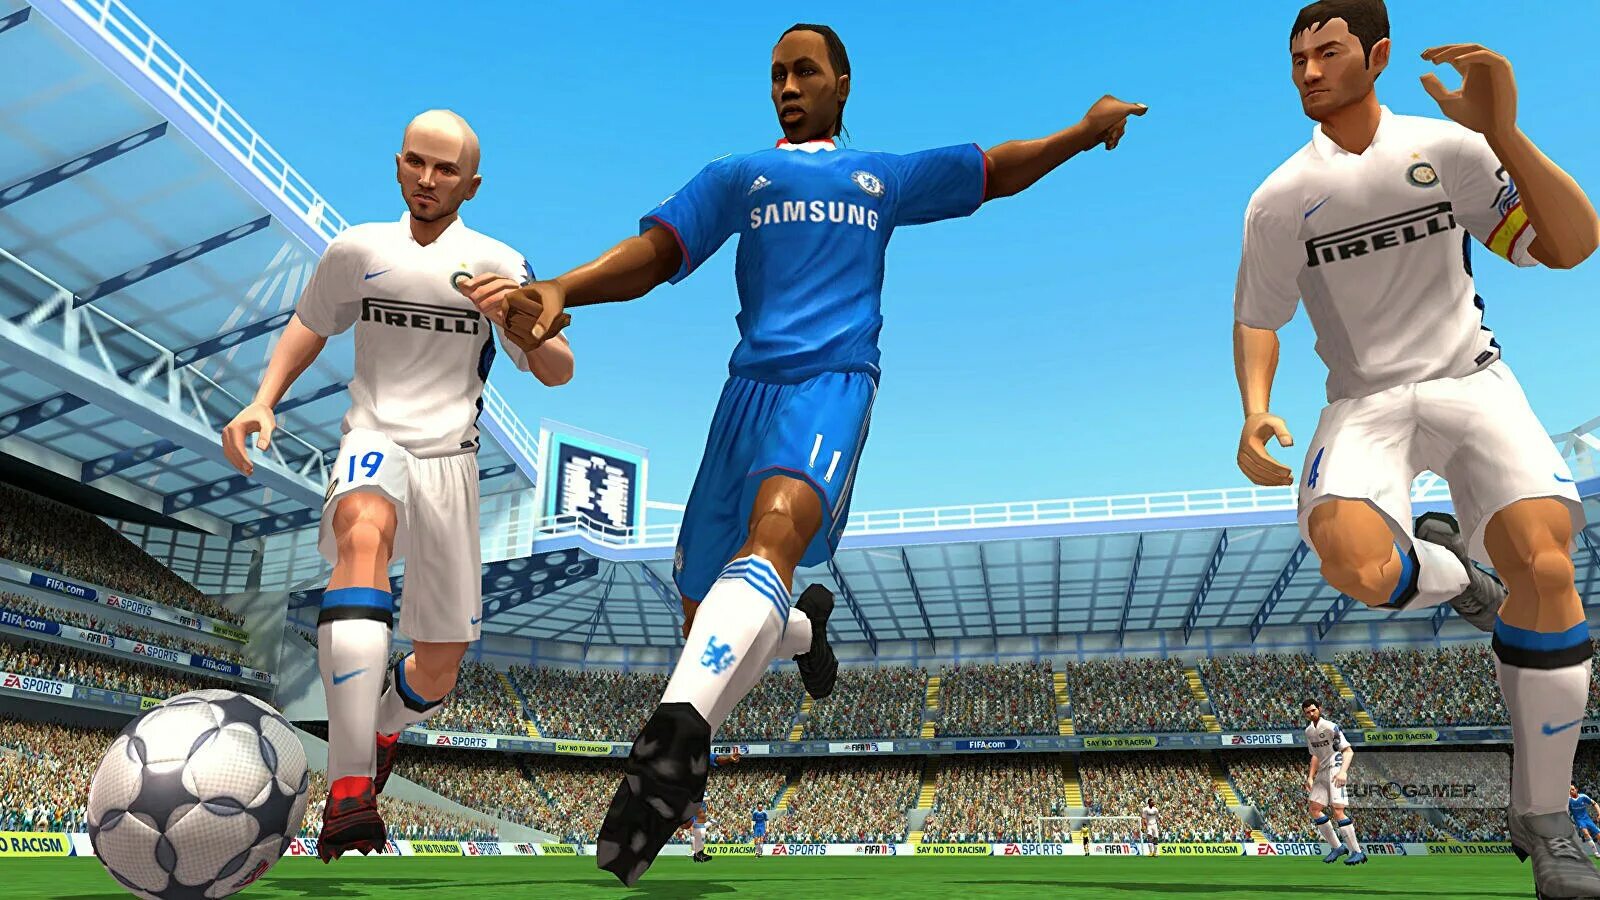 FIFA Soccer 11. Футбол ФИФА 11. Wii FIFA 11. Браузерные игры про футбол. Игра 1 11 класс